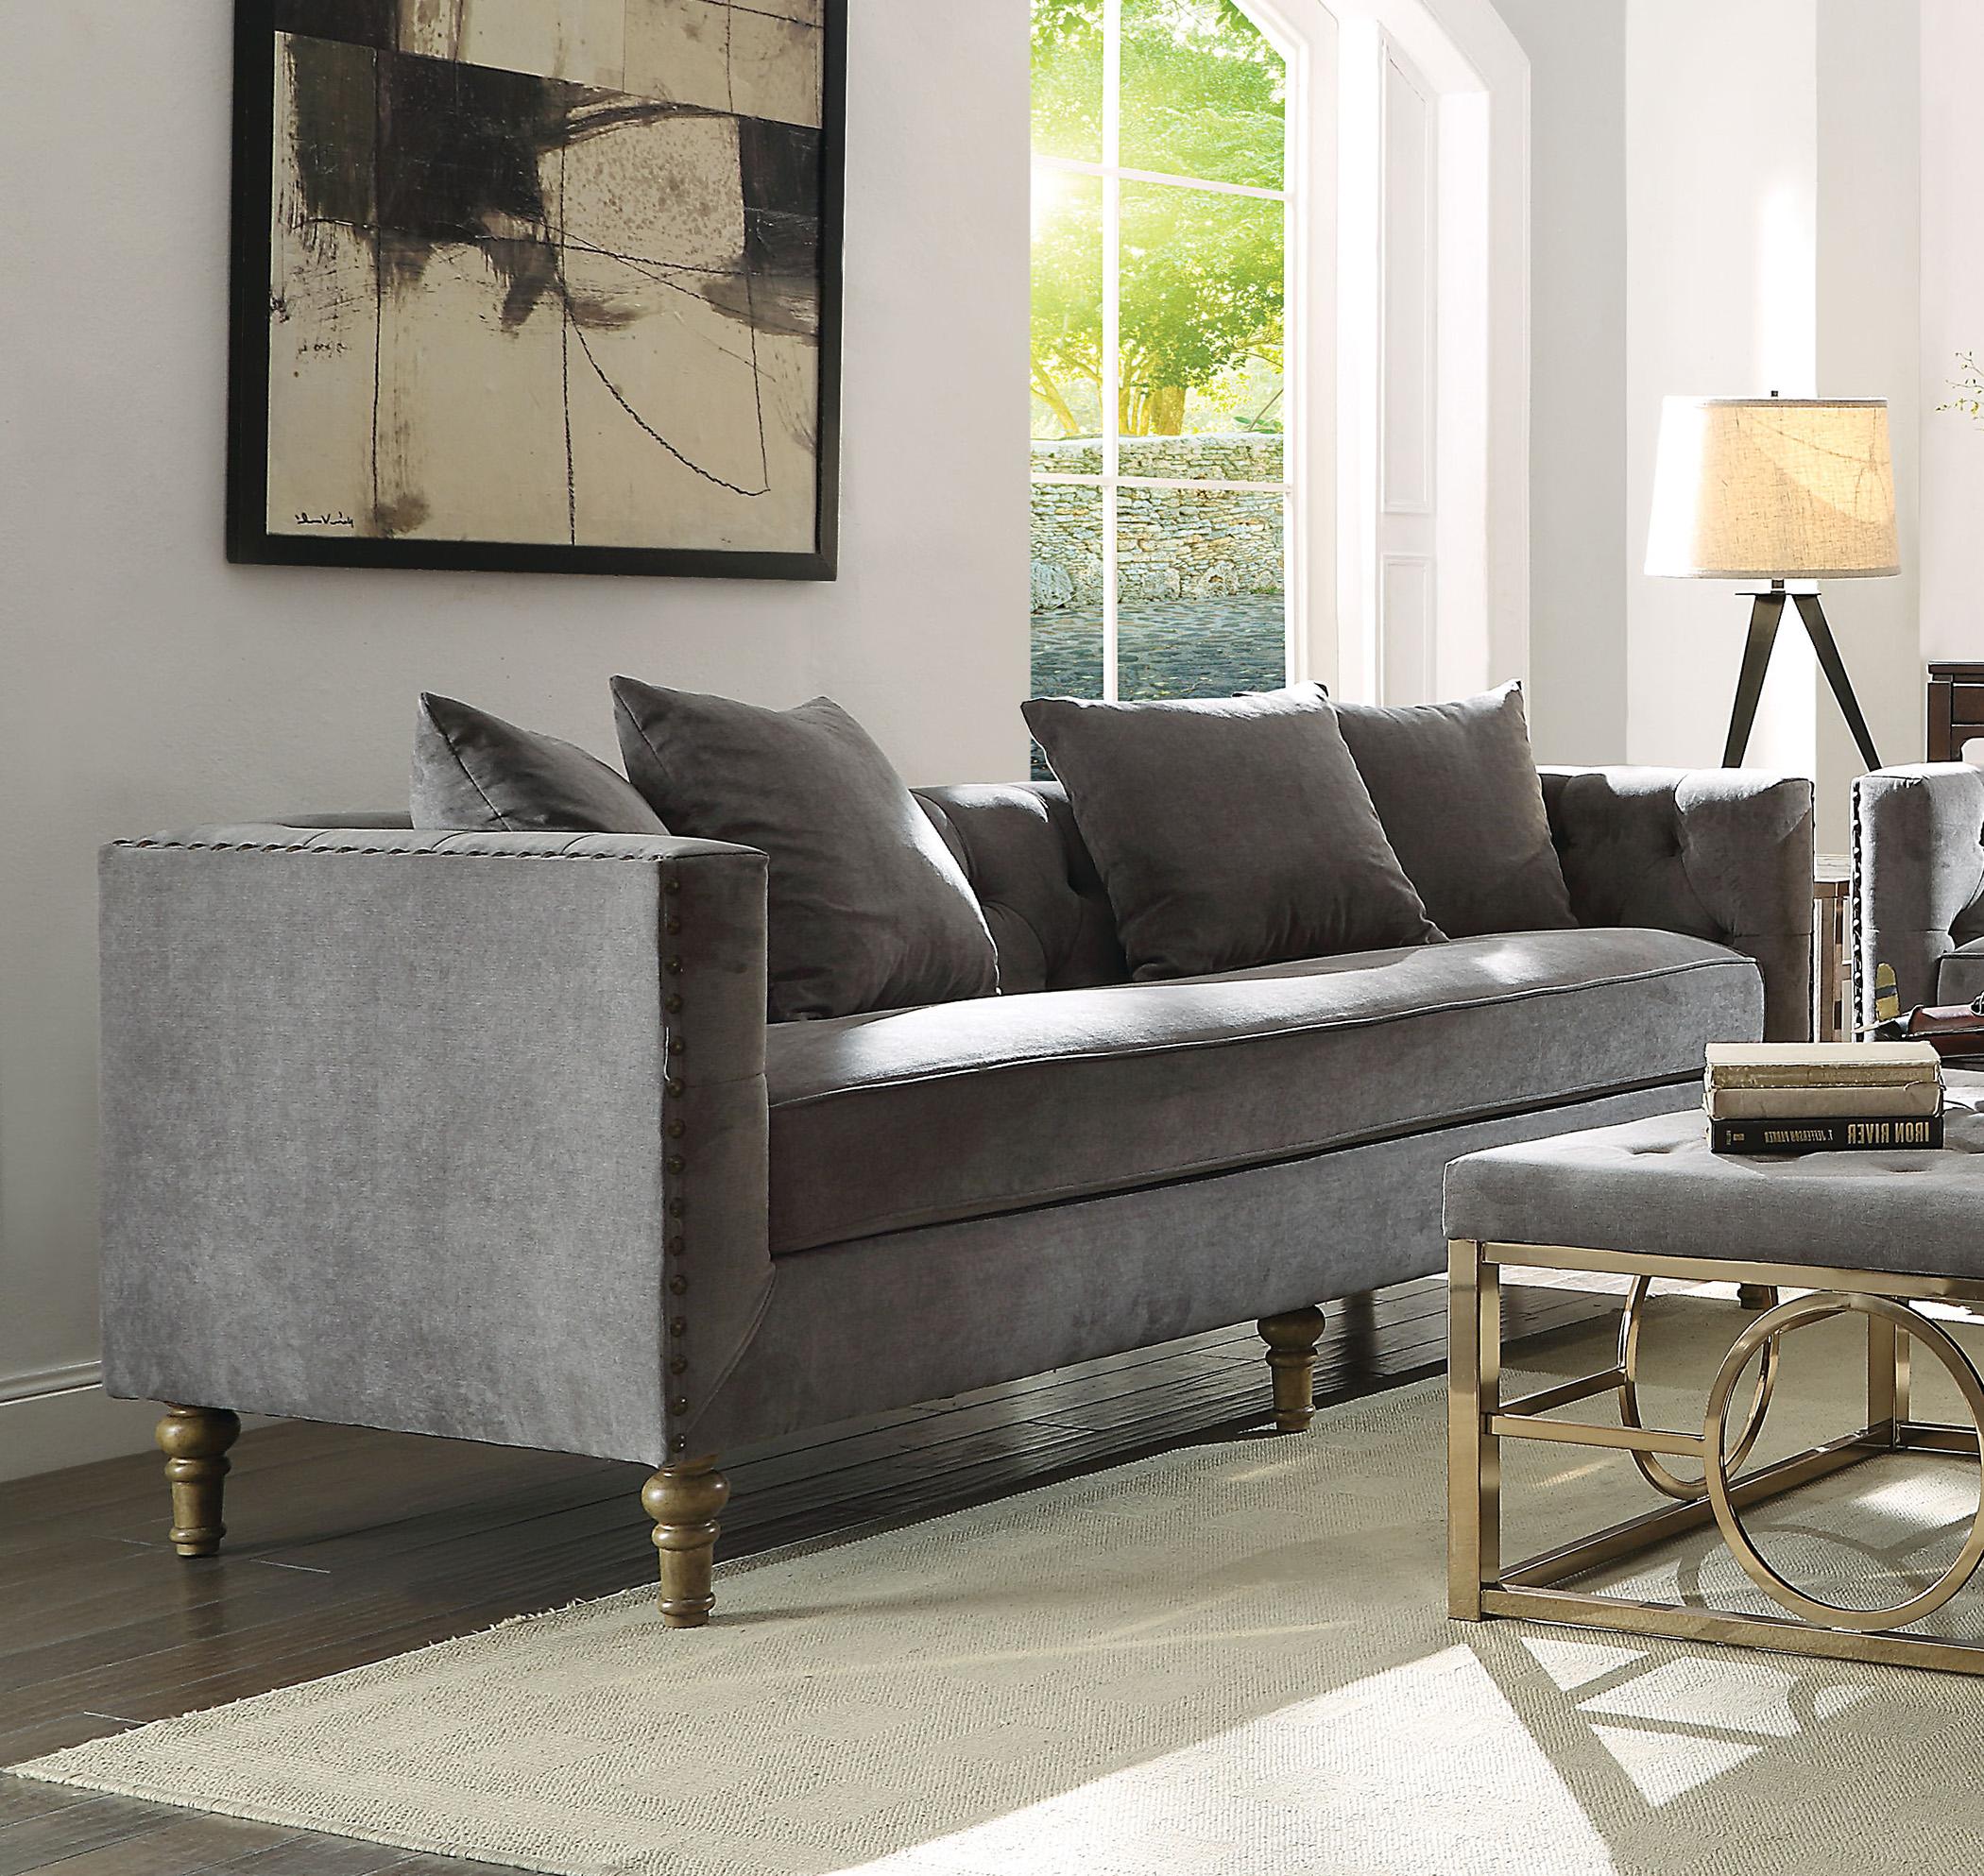 

    
Sidonia-Jaxson-53580-Set-4 Acme Furniture Sofa Loveseat Chair and Ottoman Set
